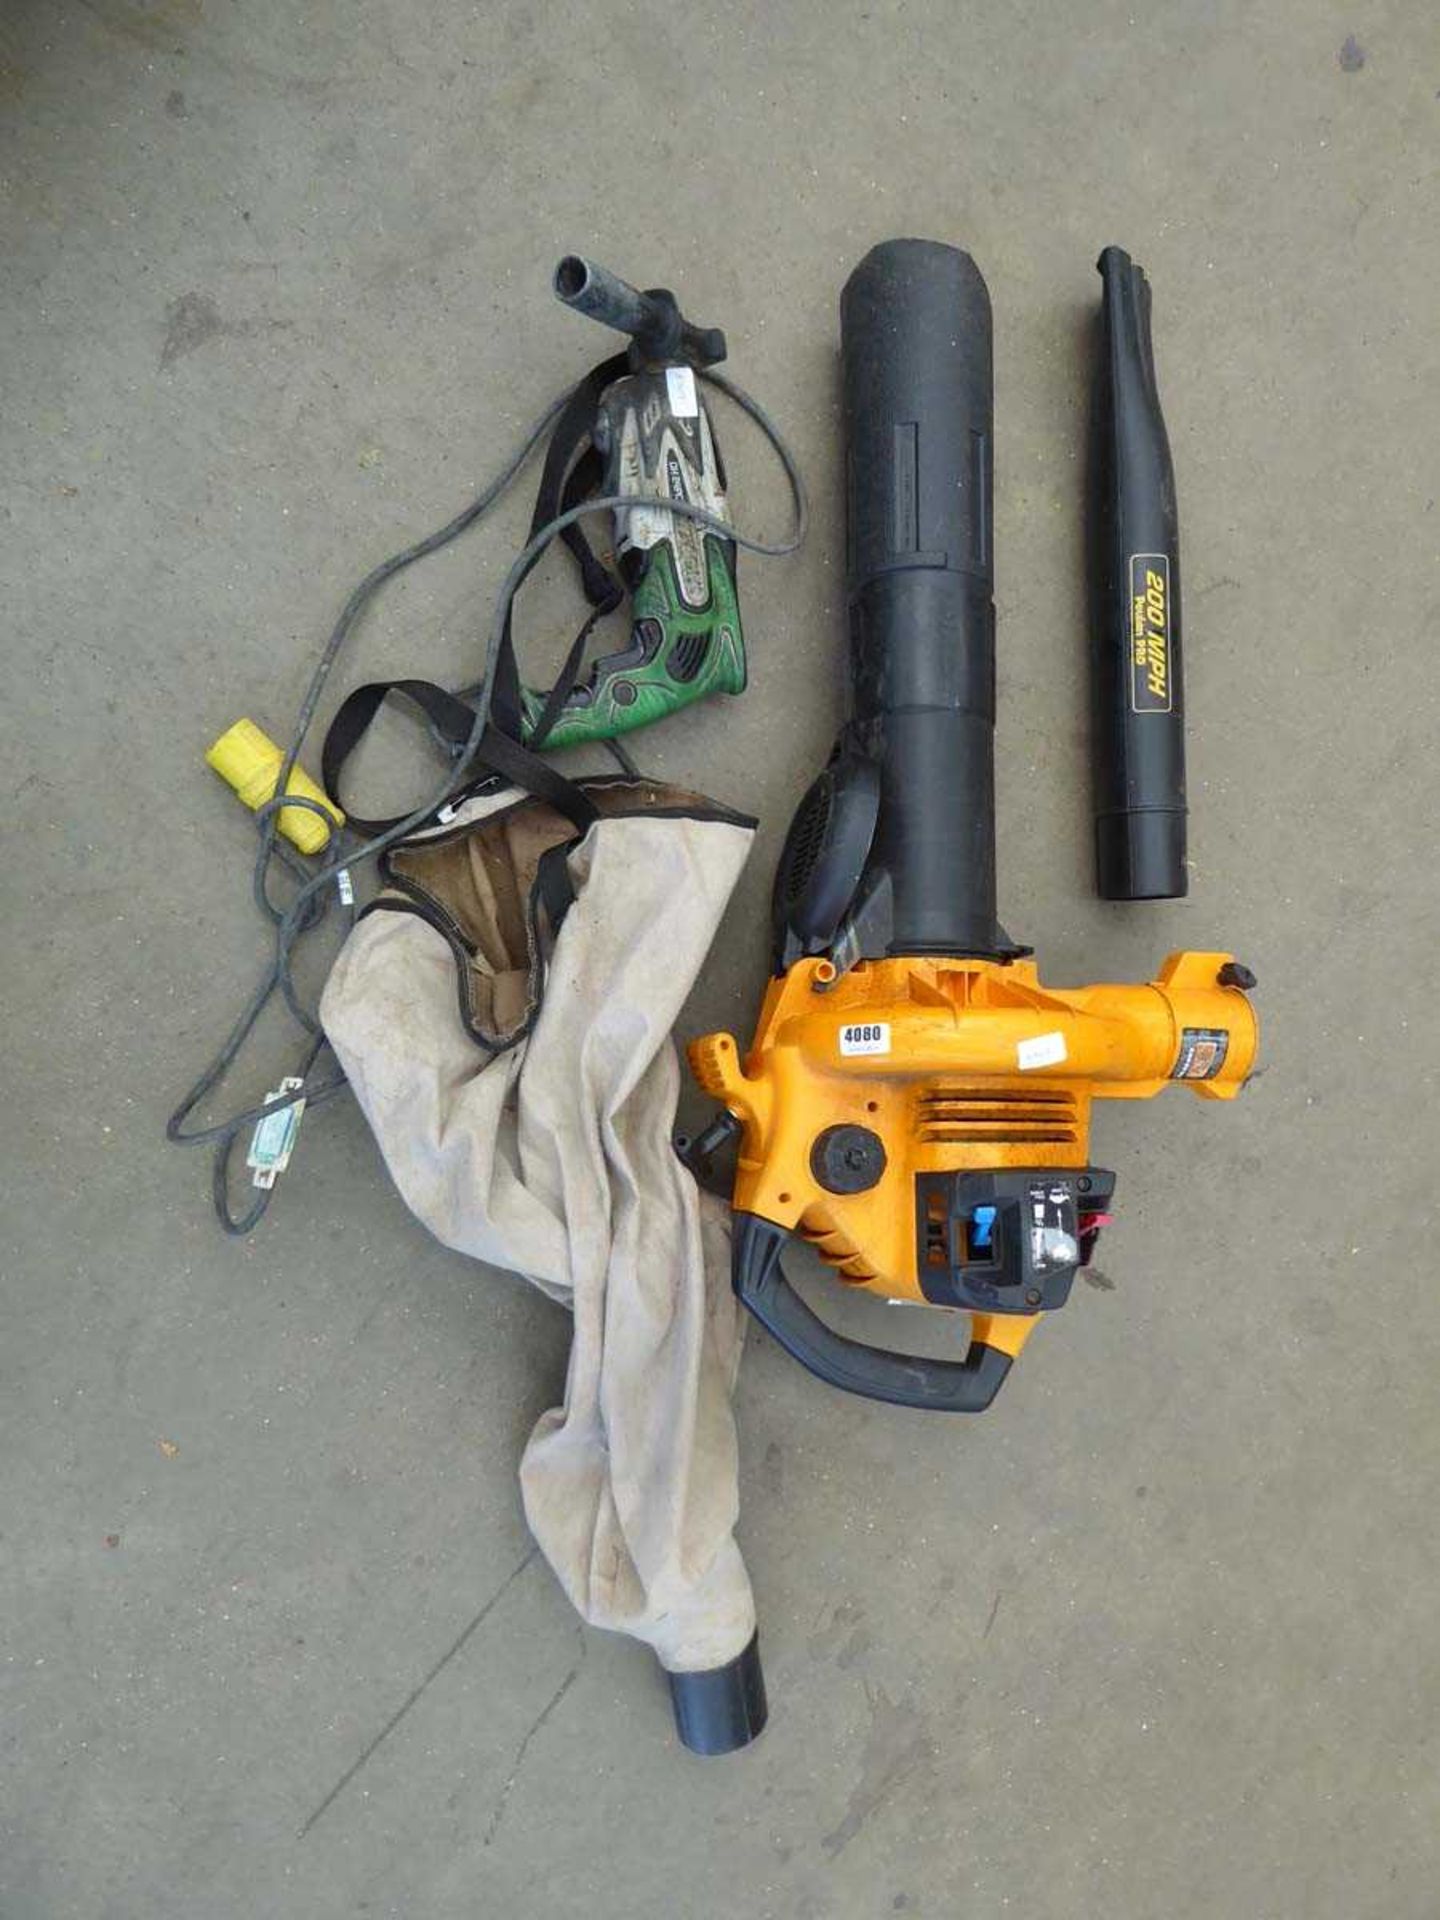 Orange petrol powered leaf blower plus drill